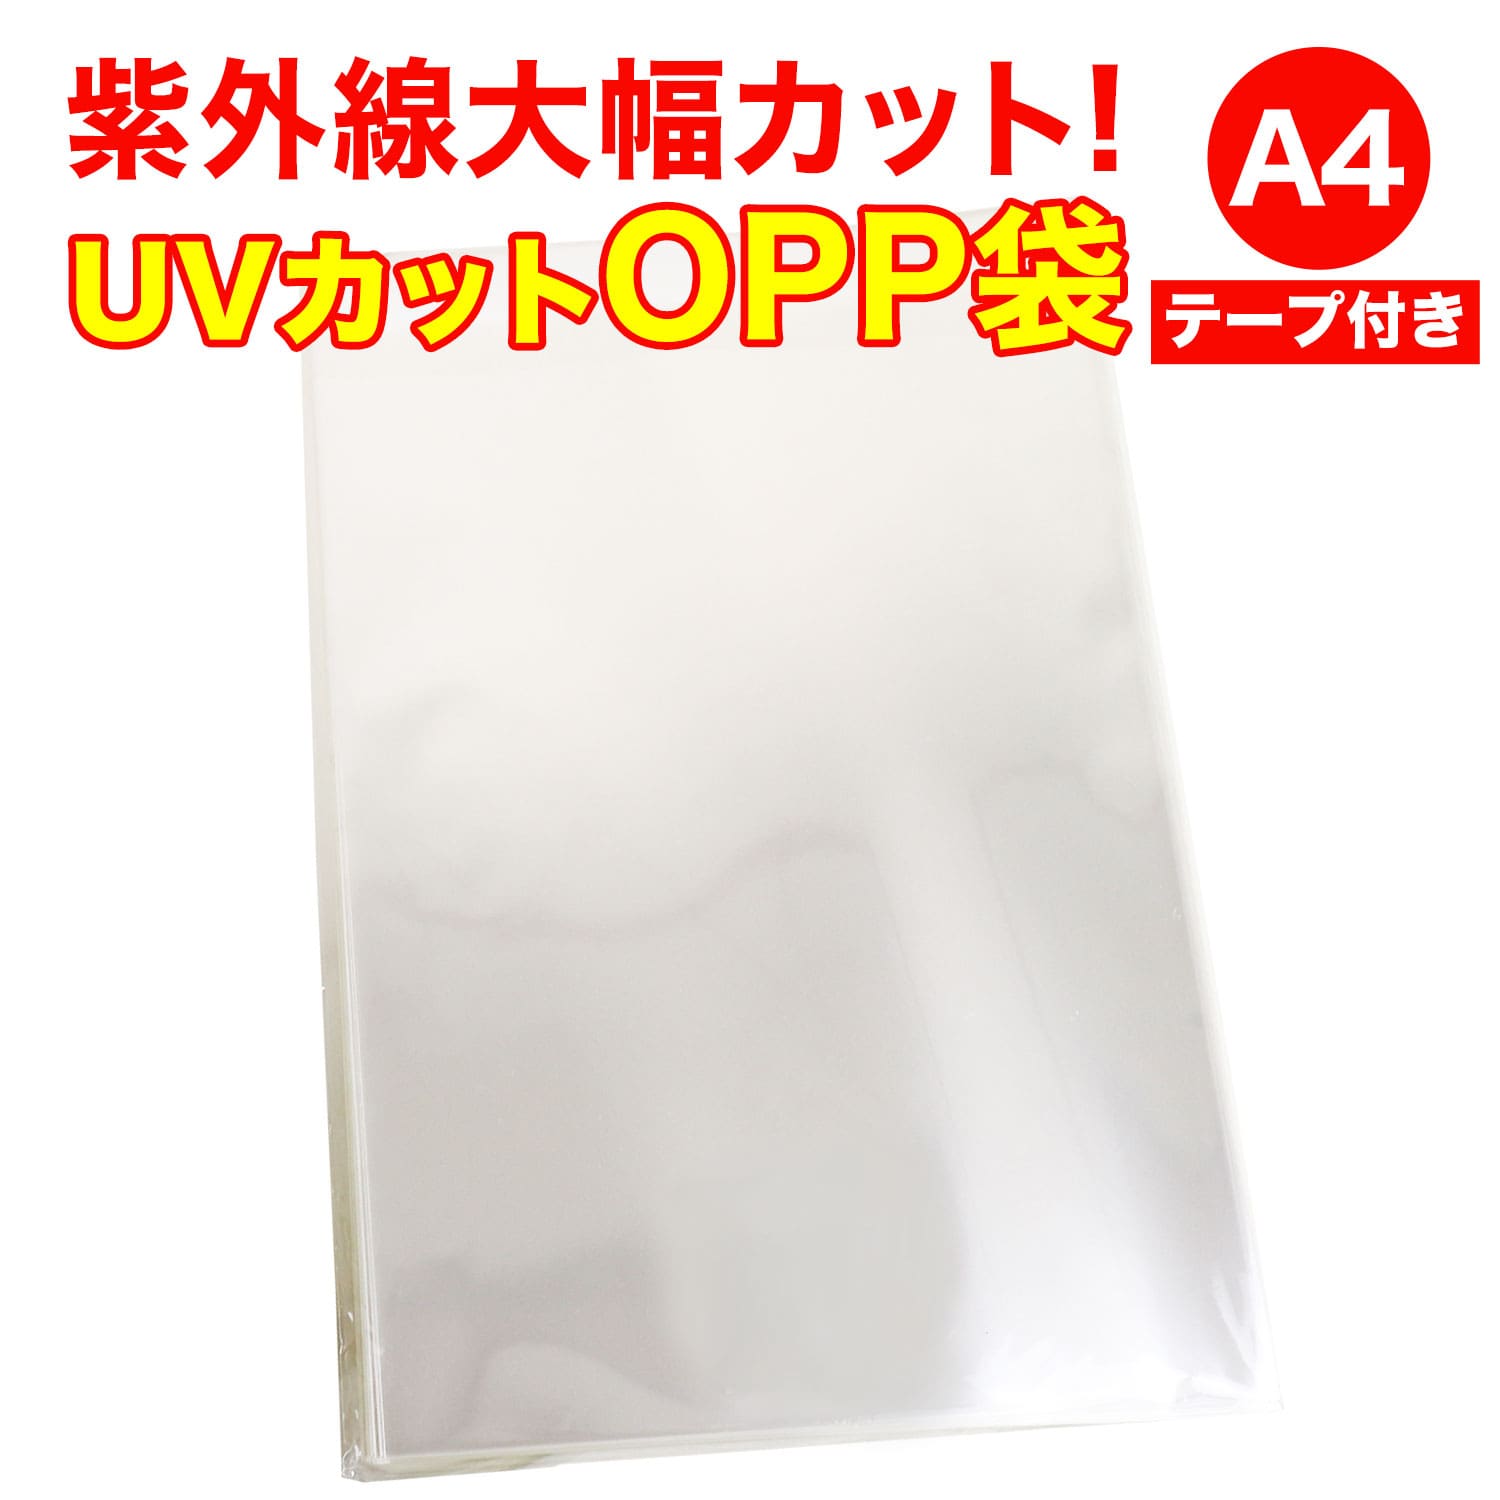 UVカット OPP袋テープ付 A4用 厚口#40